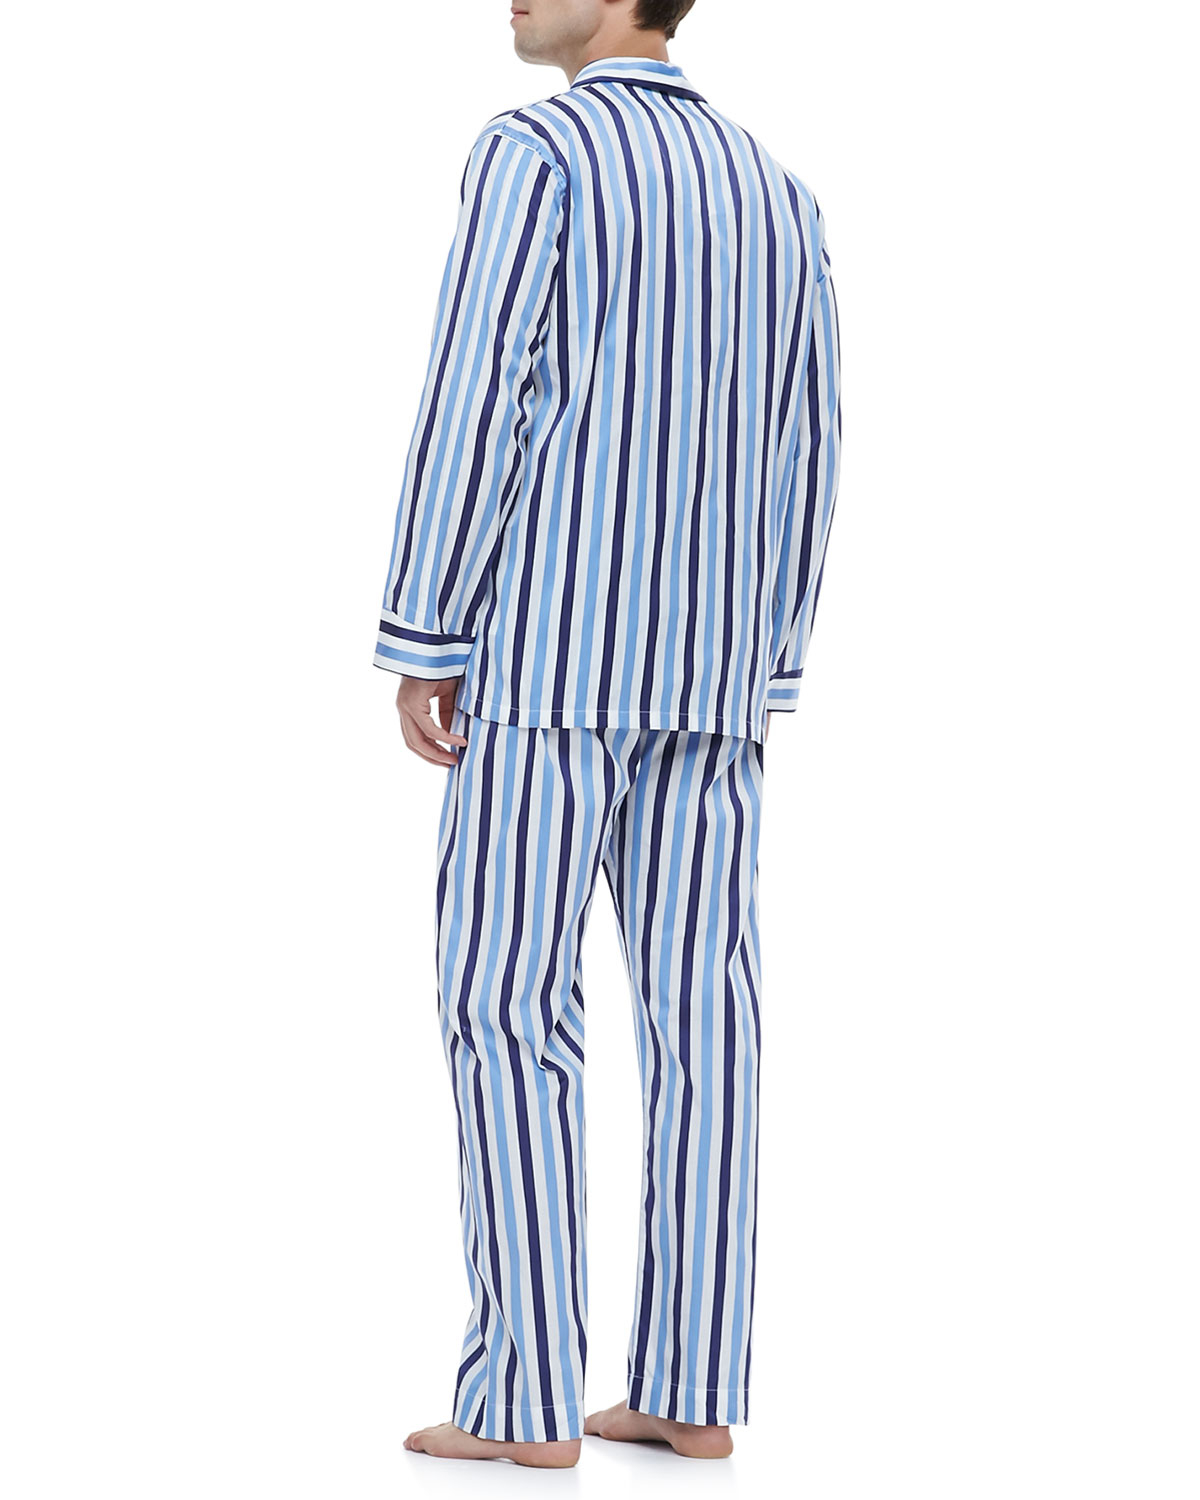 Lyst - Derek Rose Pajama Set Blue Stripe for Men